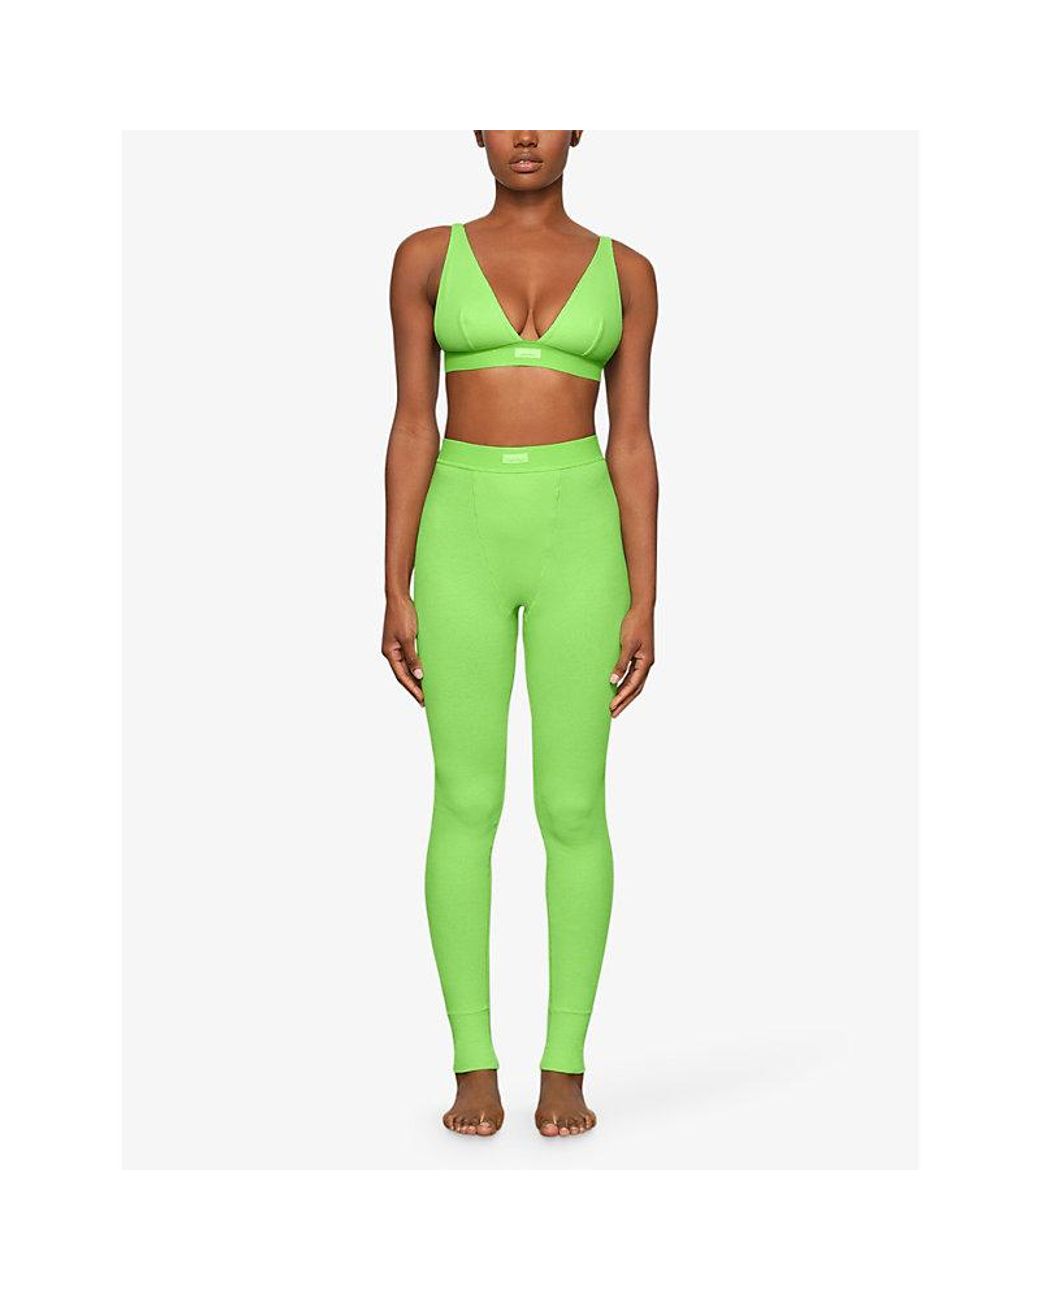 Skims Women Army Green Nylon Blend Stretch High Rise Soft Smoothing Legging  Sz S 789091189220